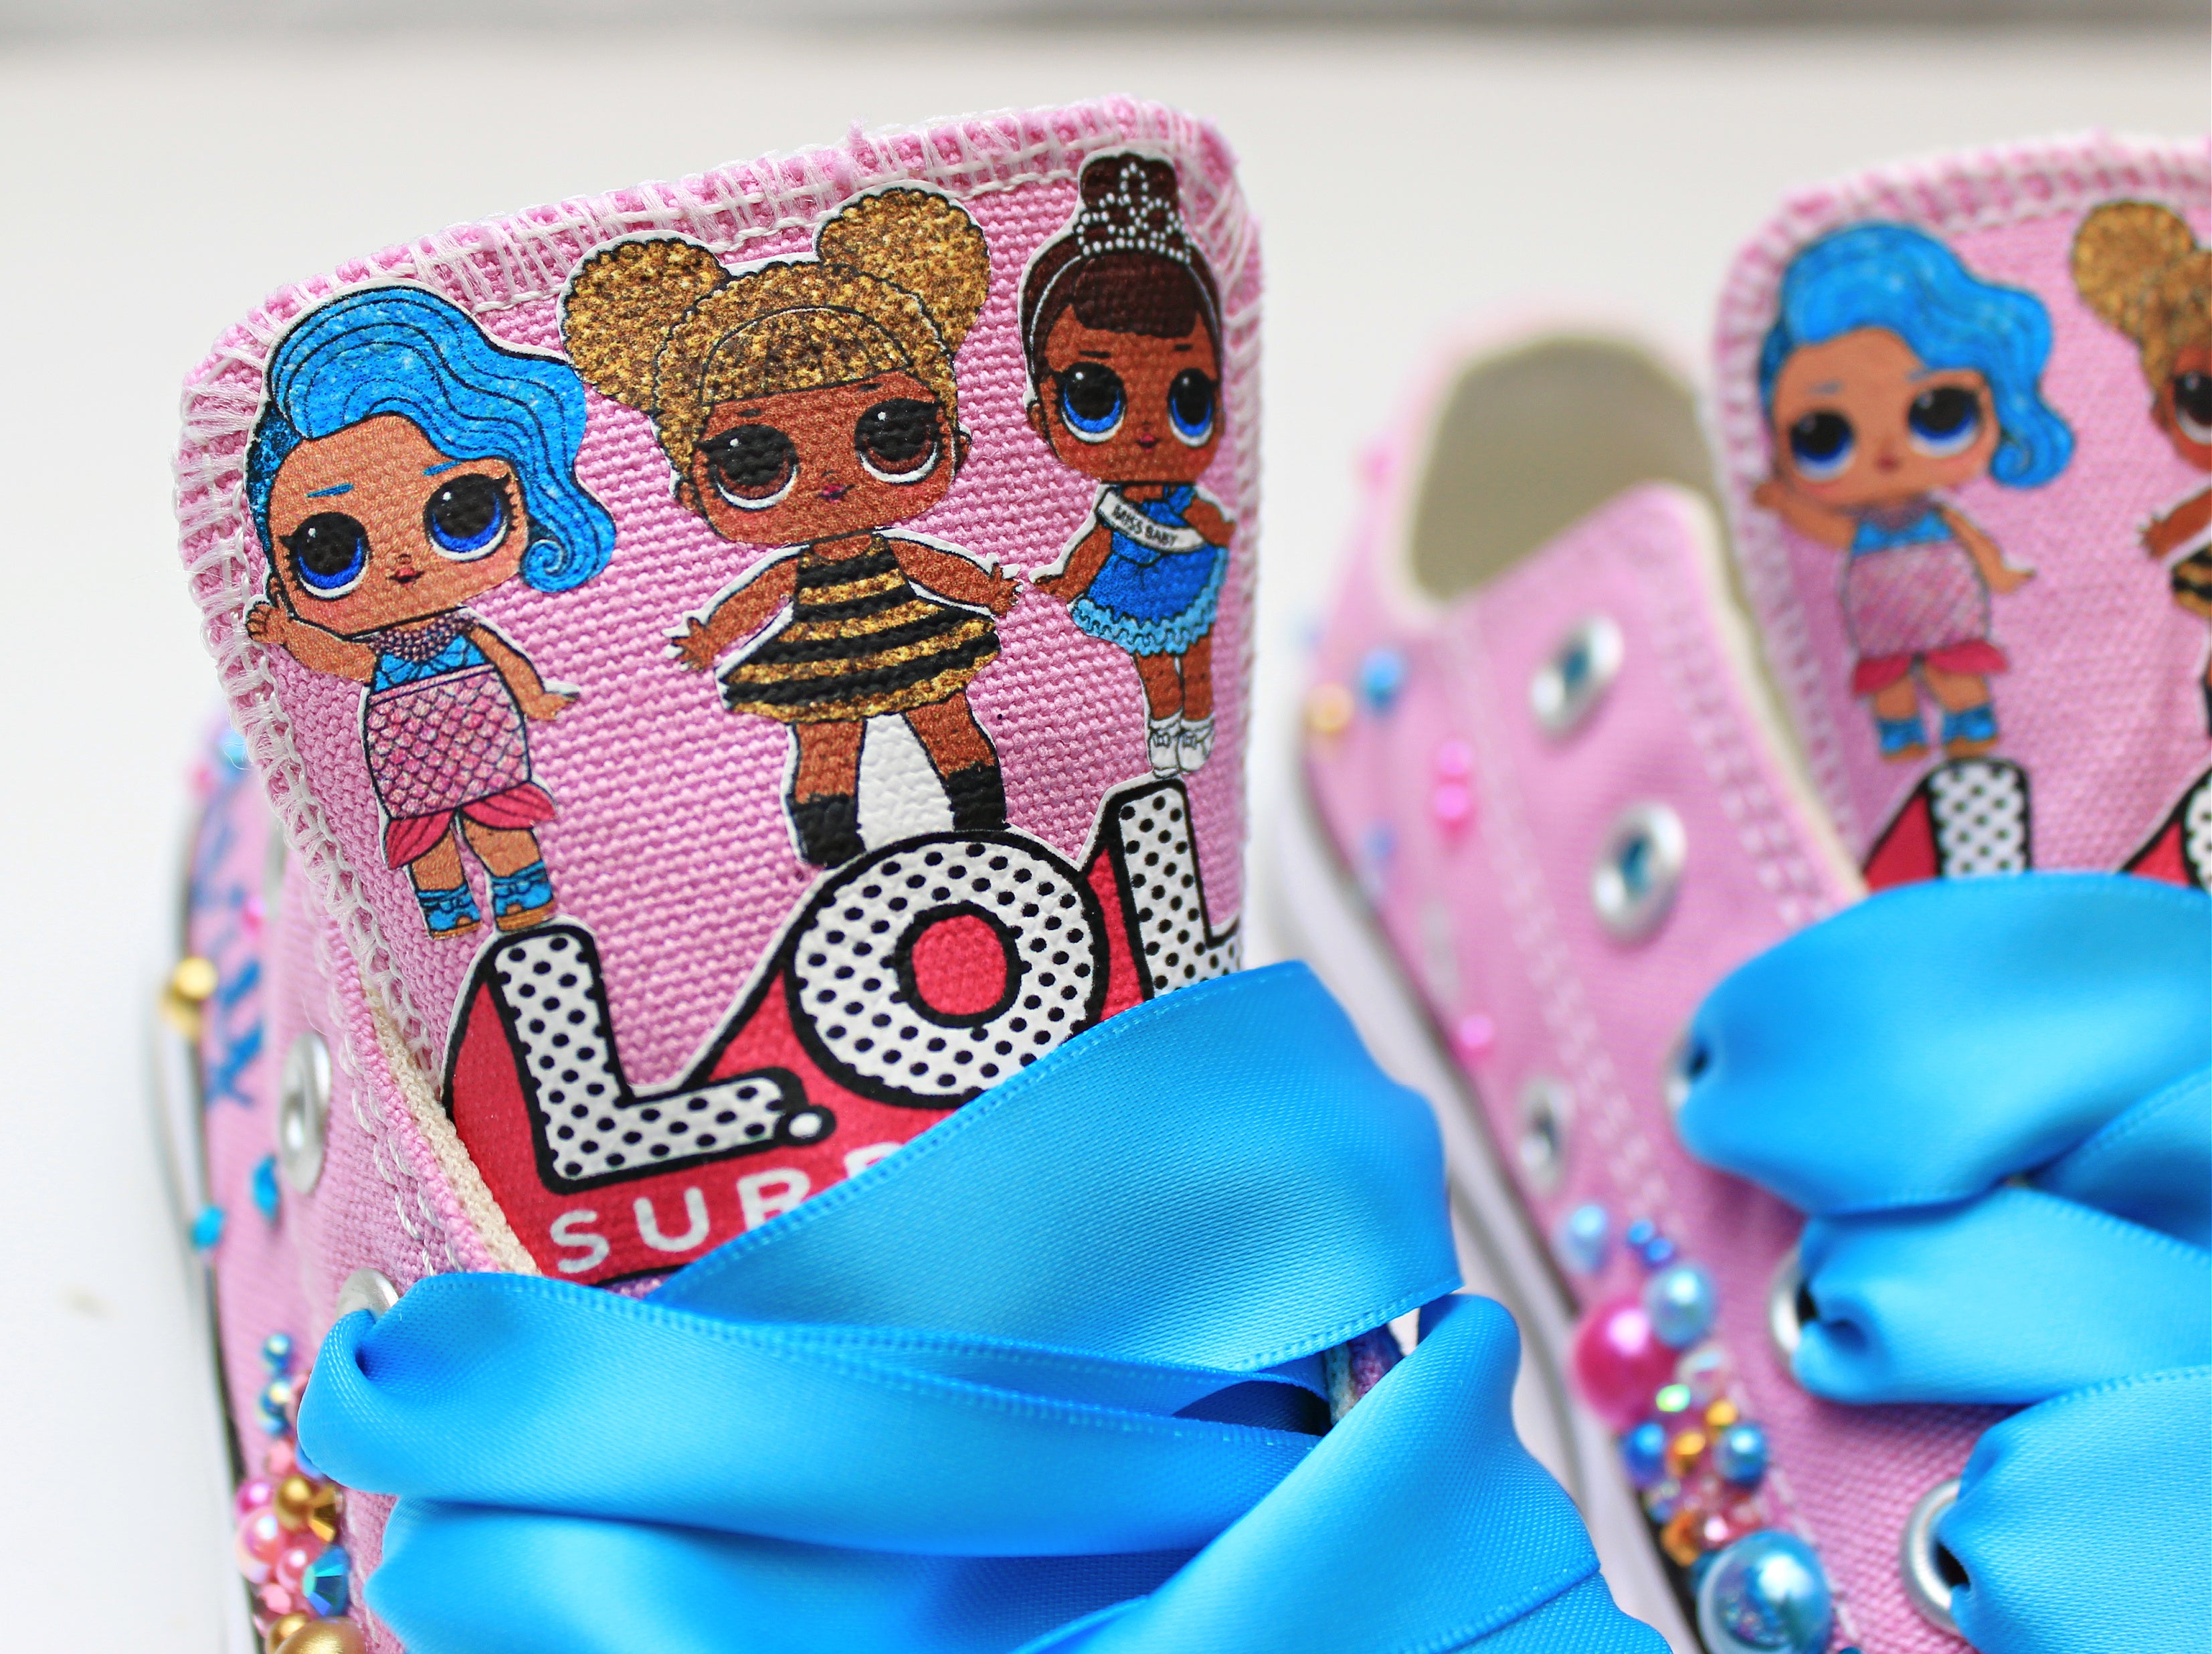 Lol doll shoes- Lol doll bling Converse-Girls Lol doll  Shoes-Lol doll  Converse